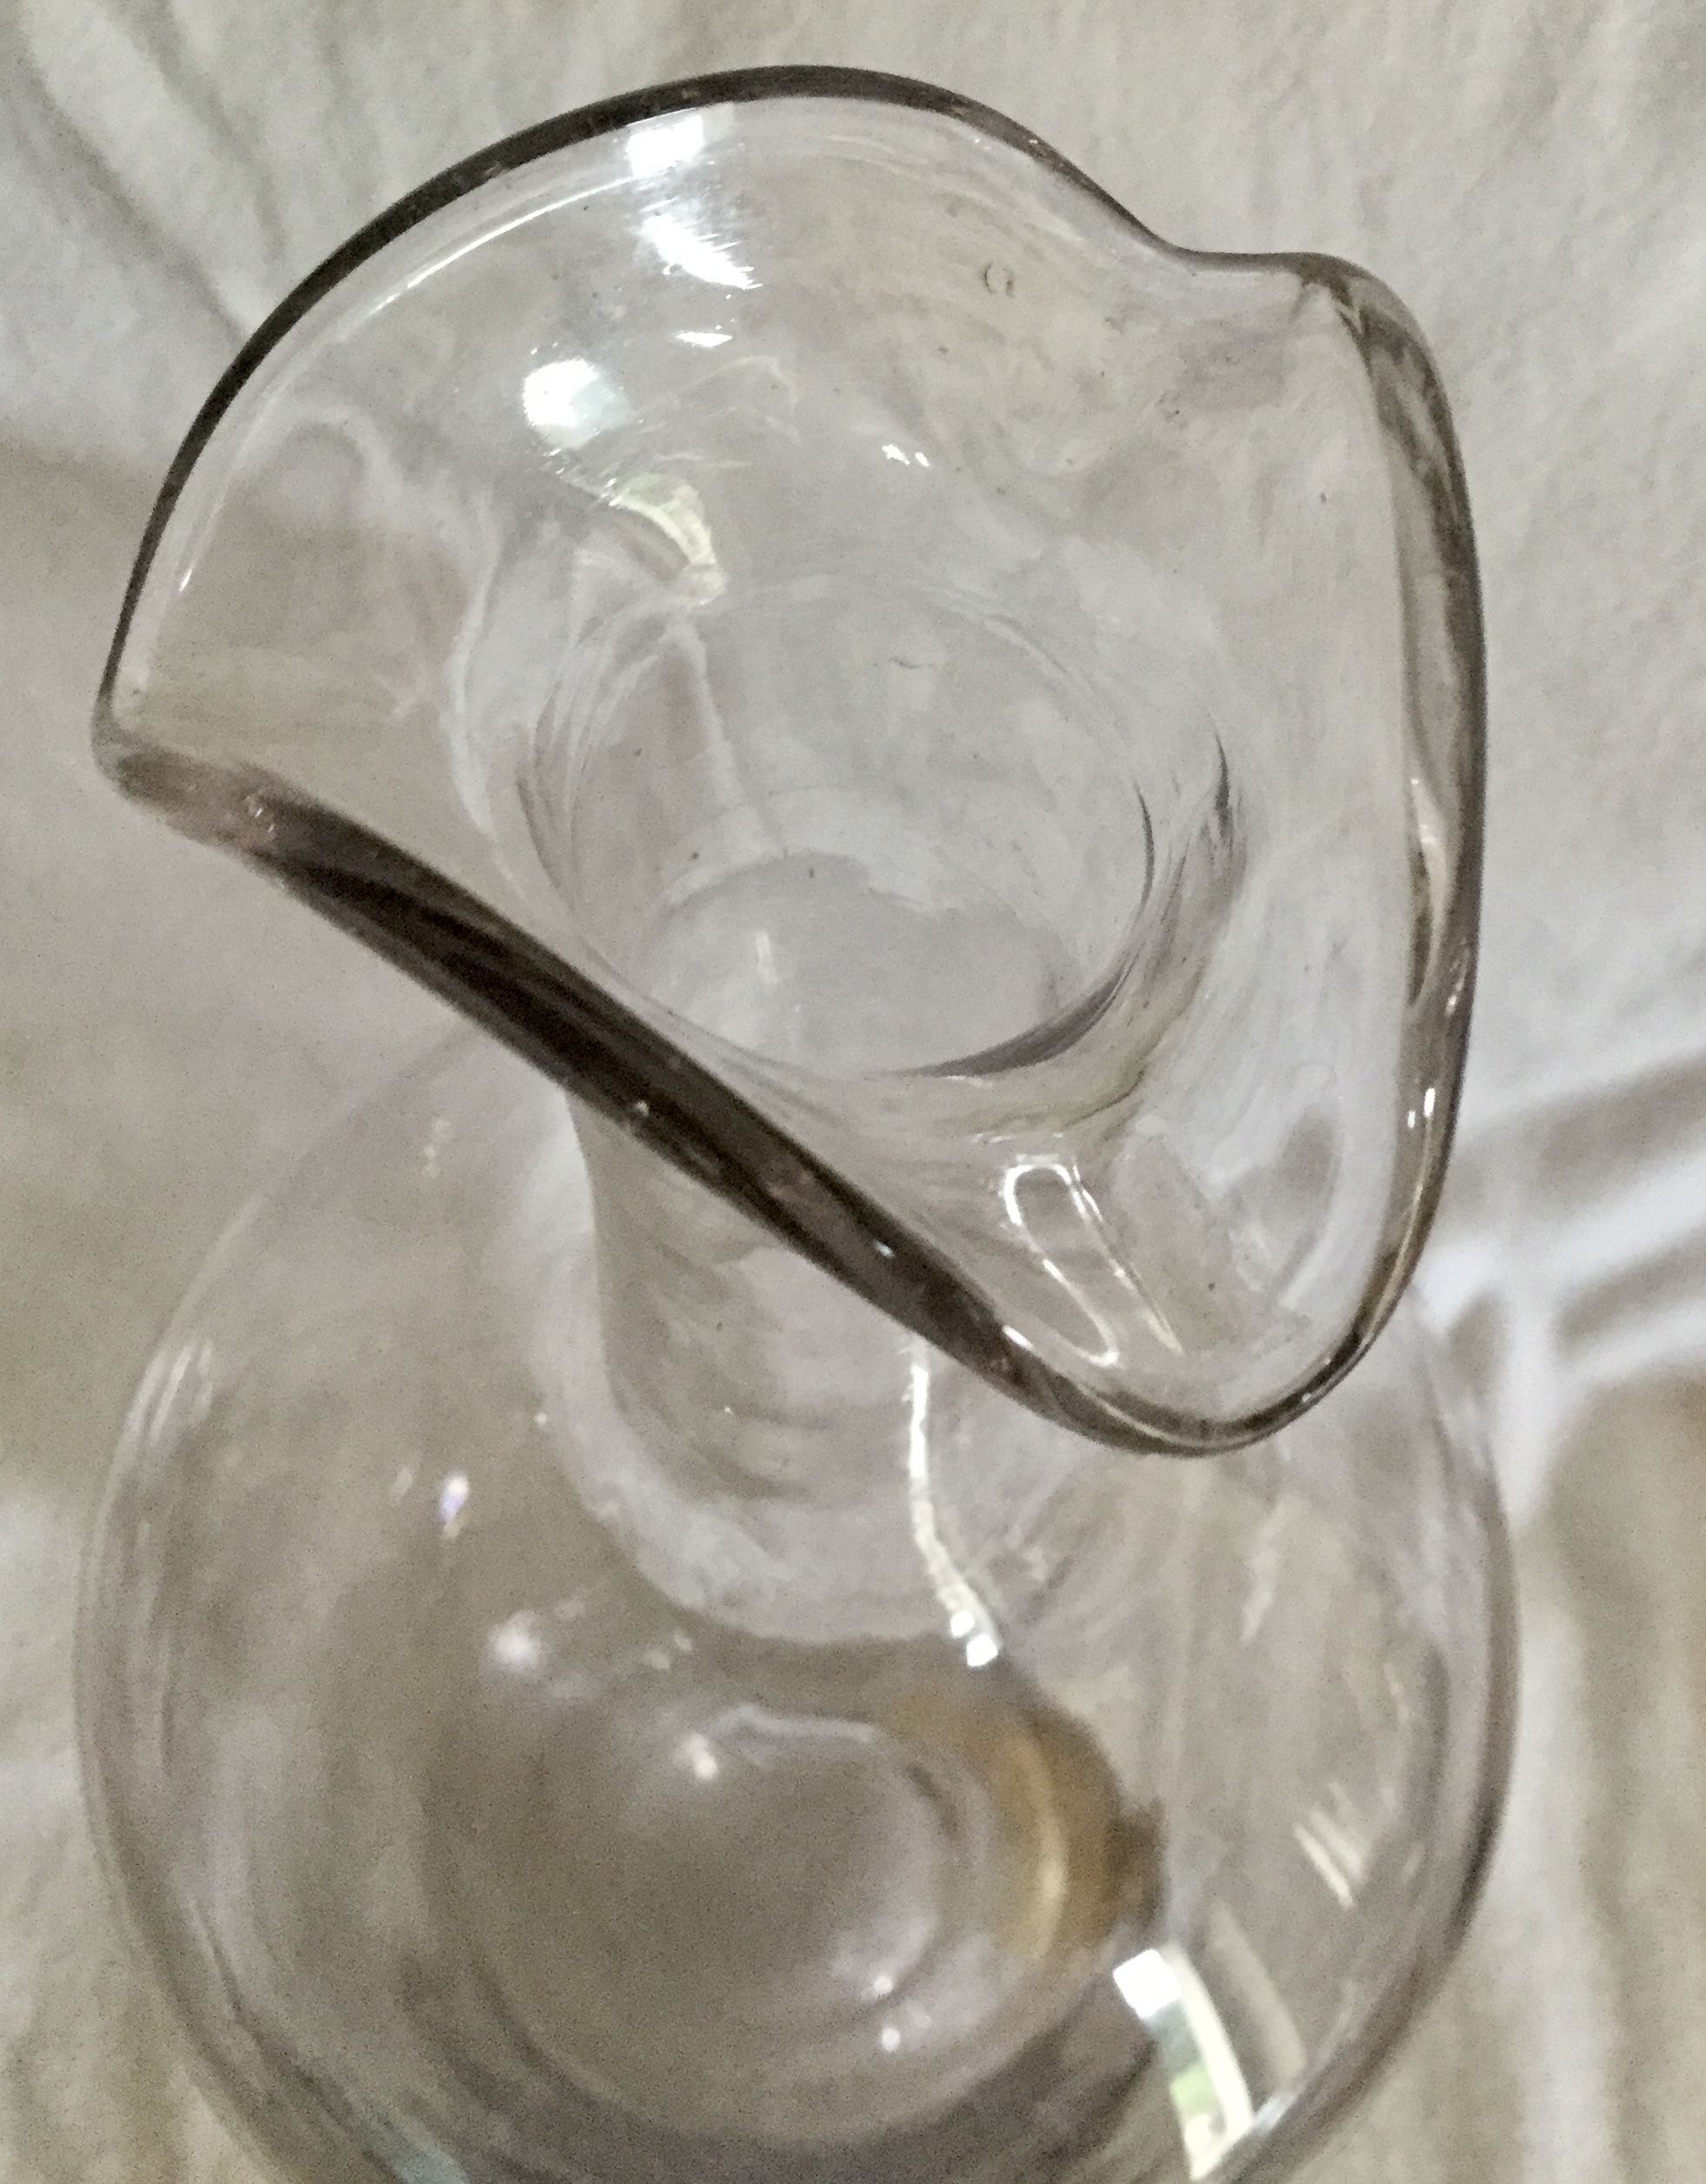 Vintage Sleek French Plain Glass Wine Decanter - Image 2 of 6